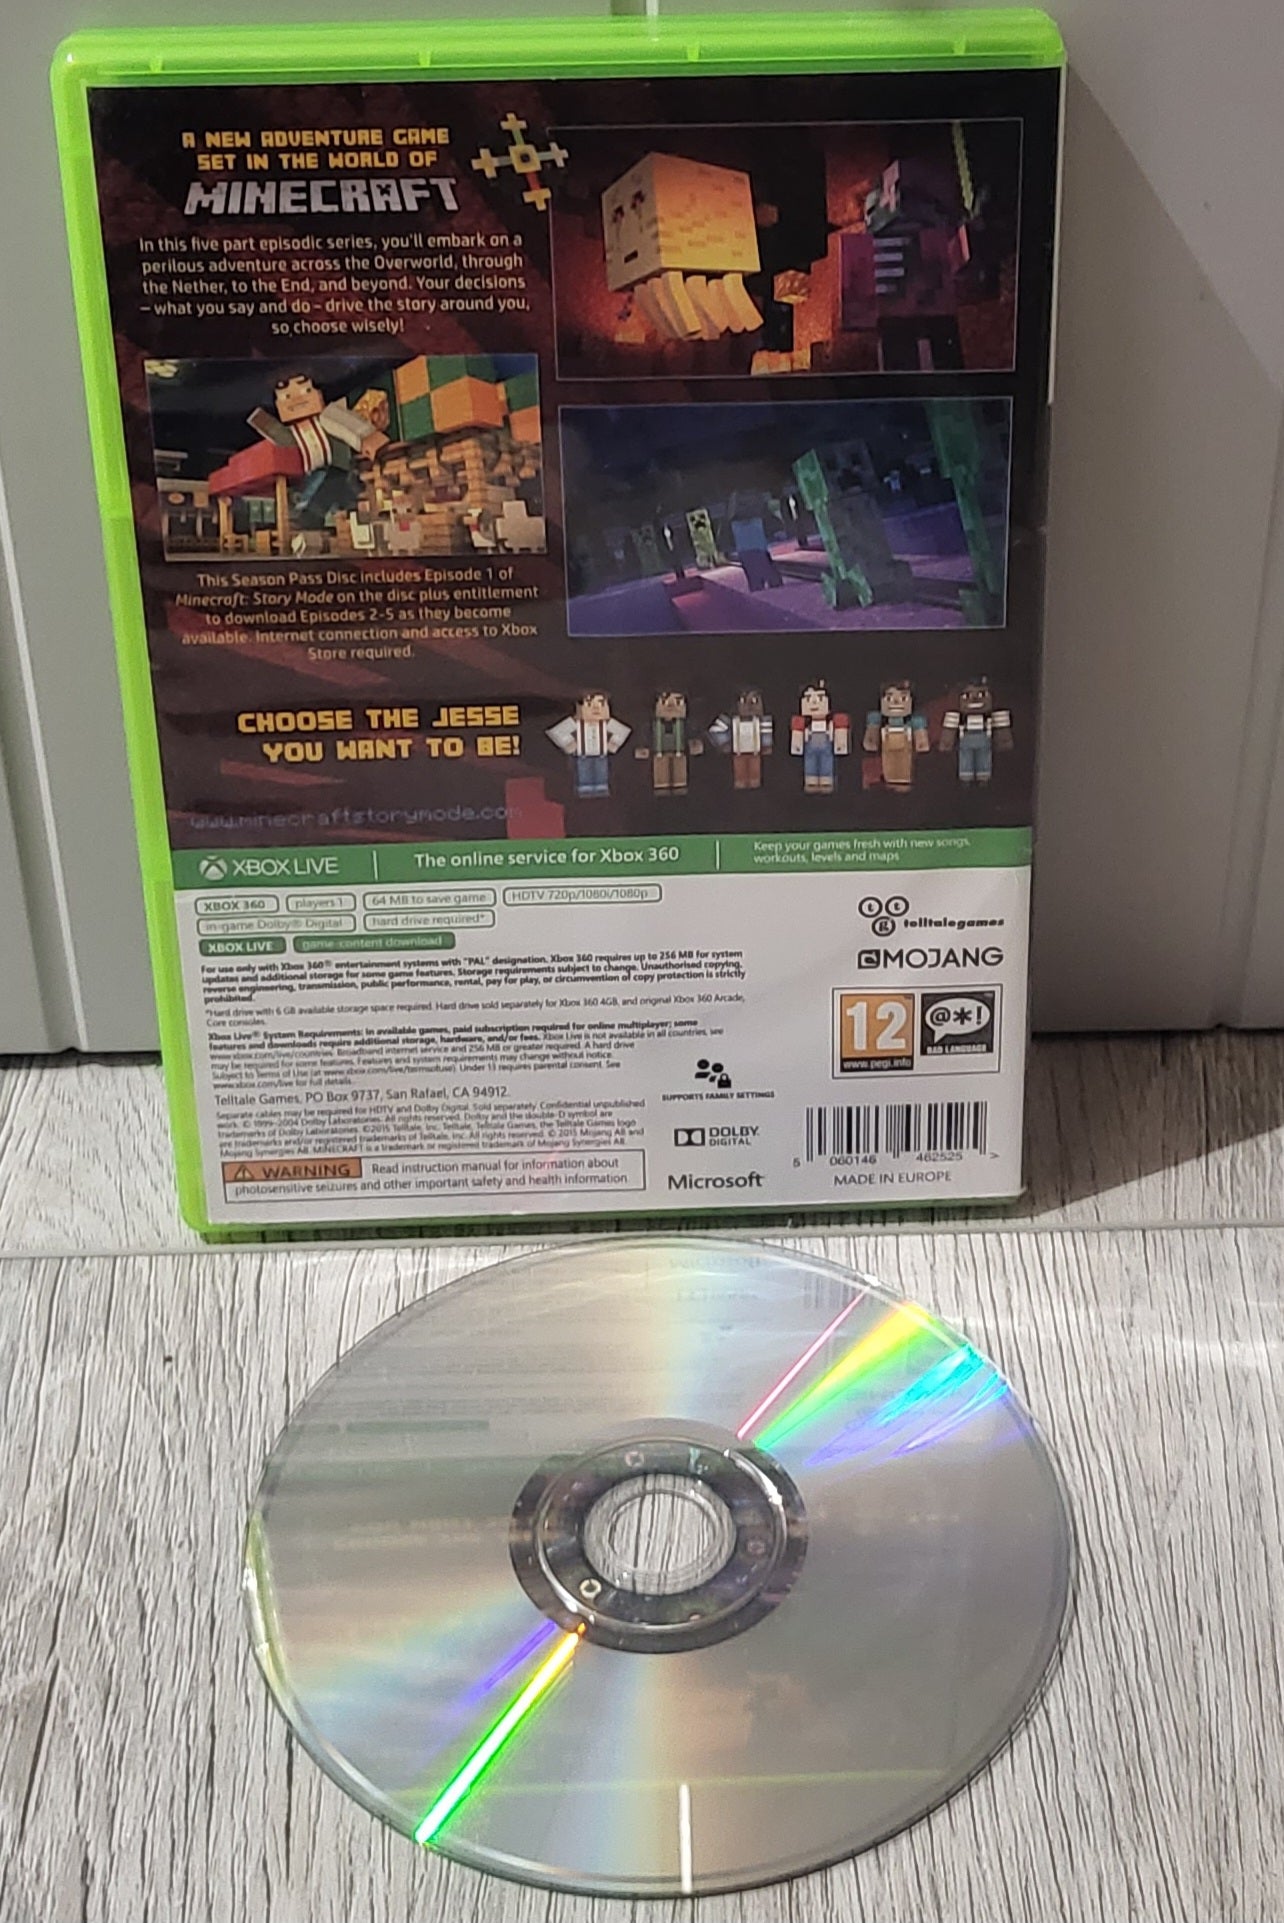 Minecraft: Story Mode -- Season Two: Season Pass Disc (Microsoft